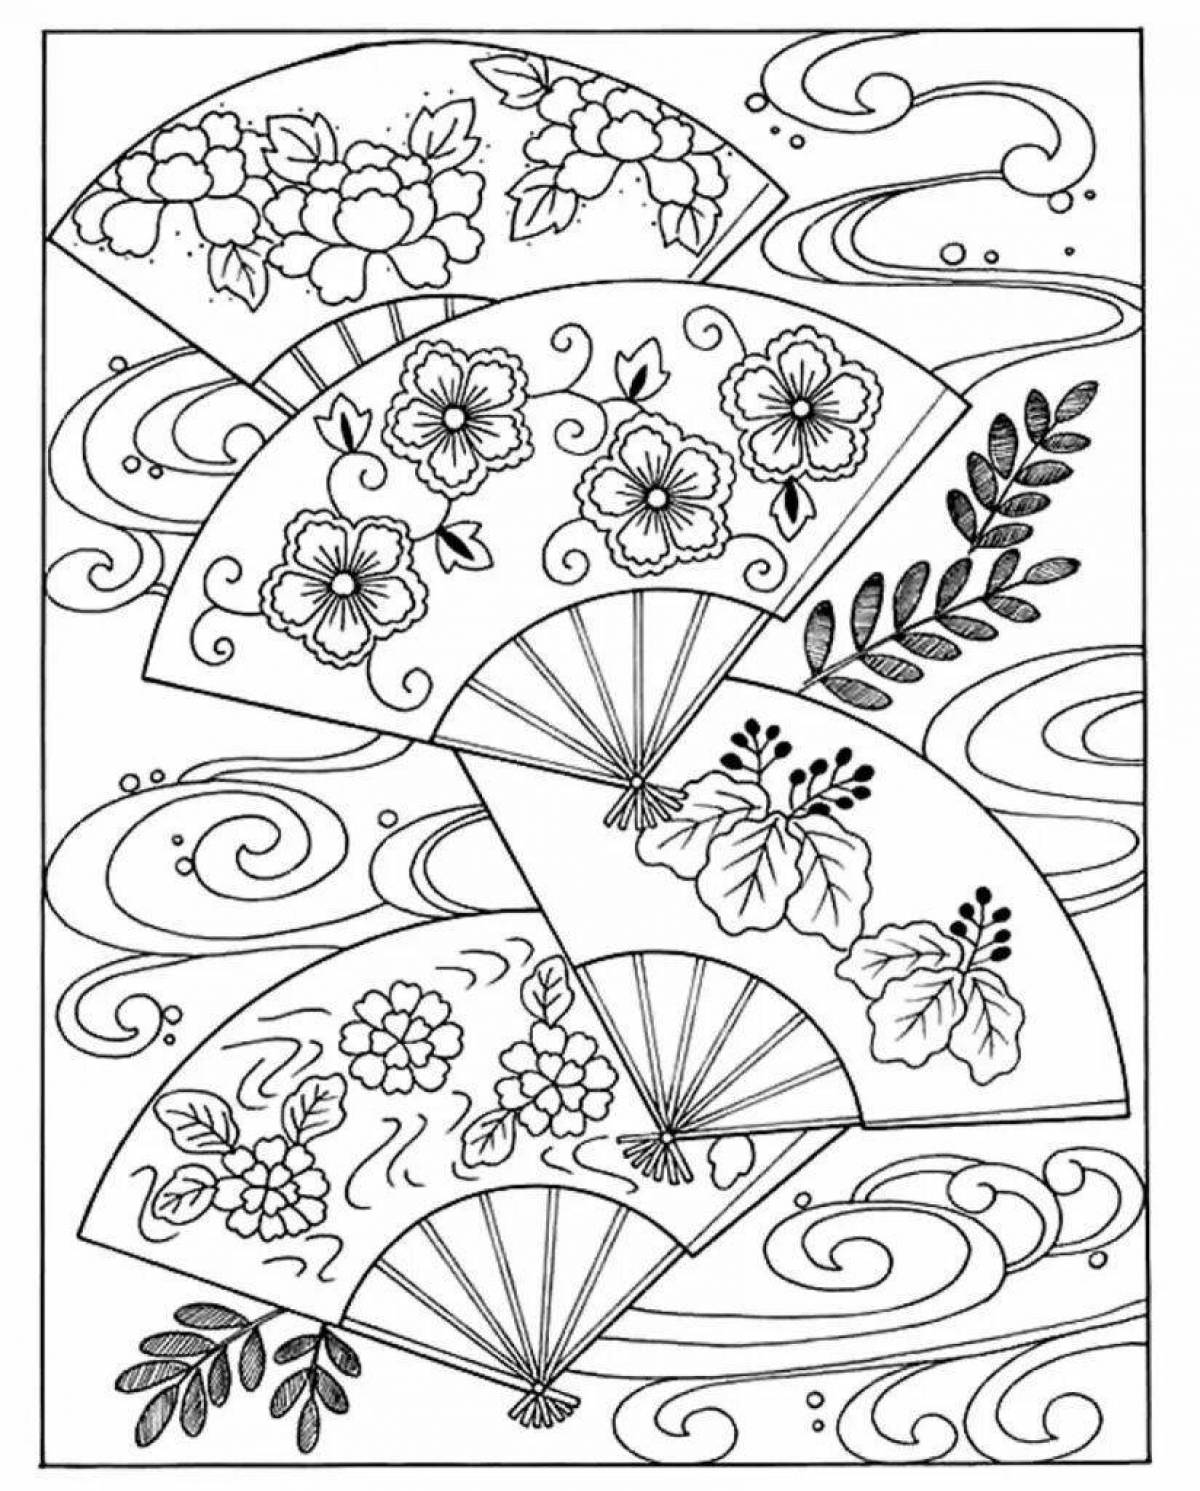 Adorable Japanese motif coloring book